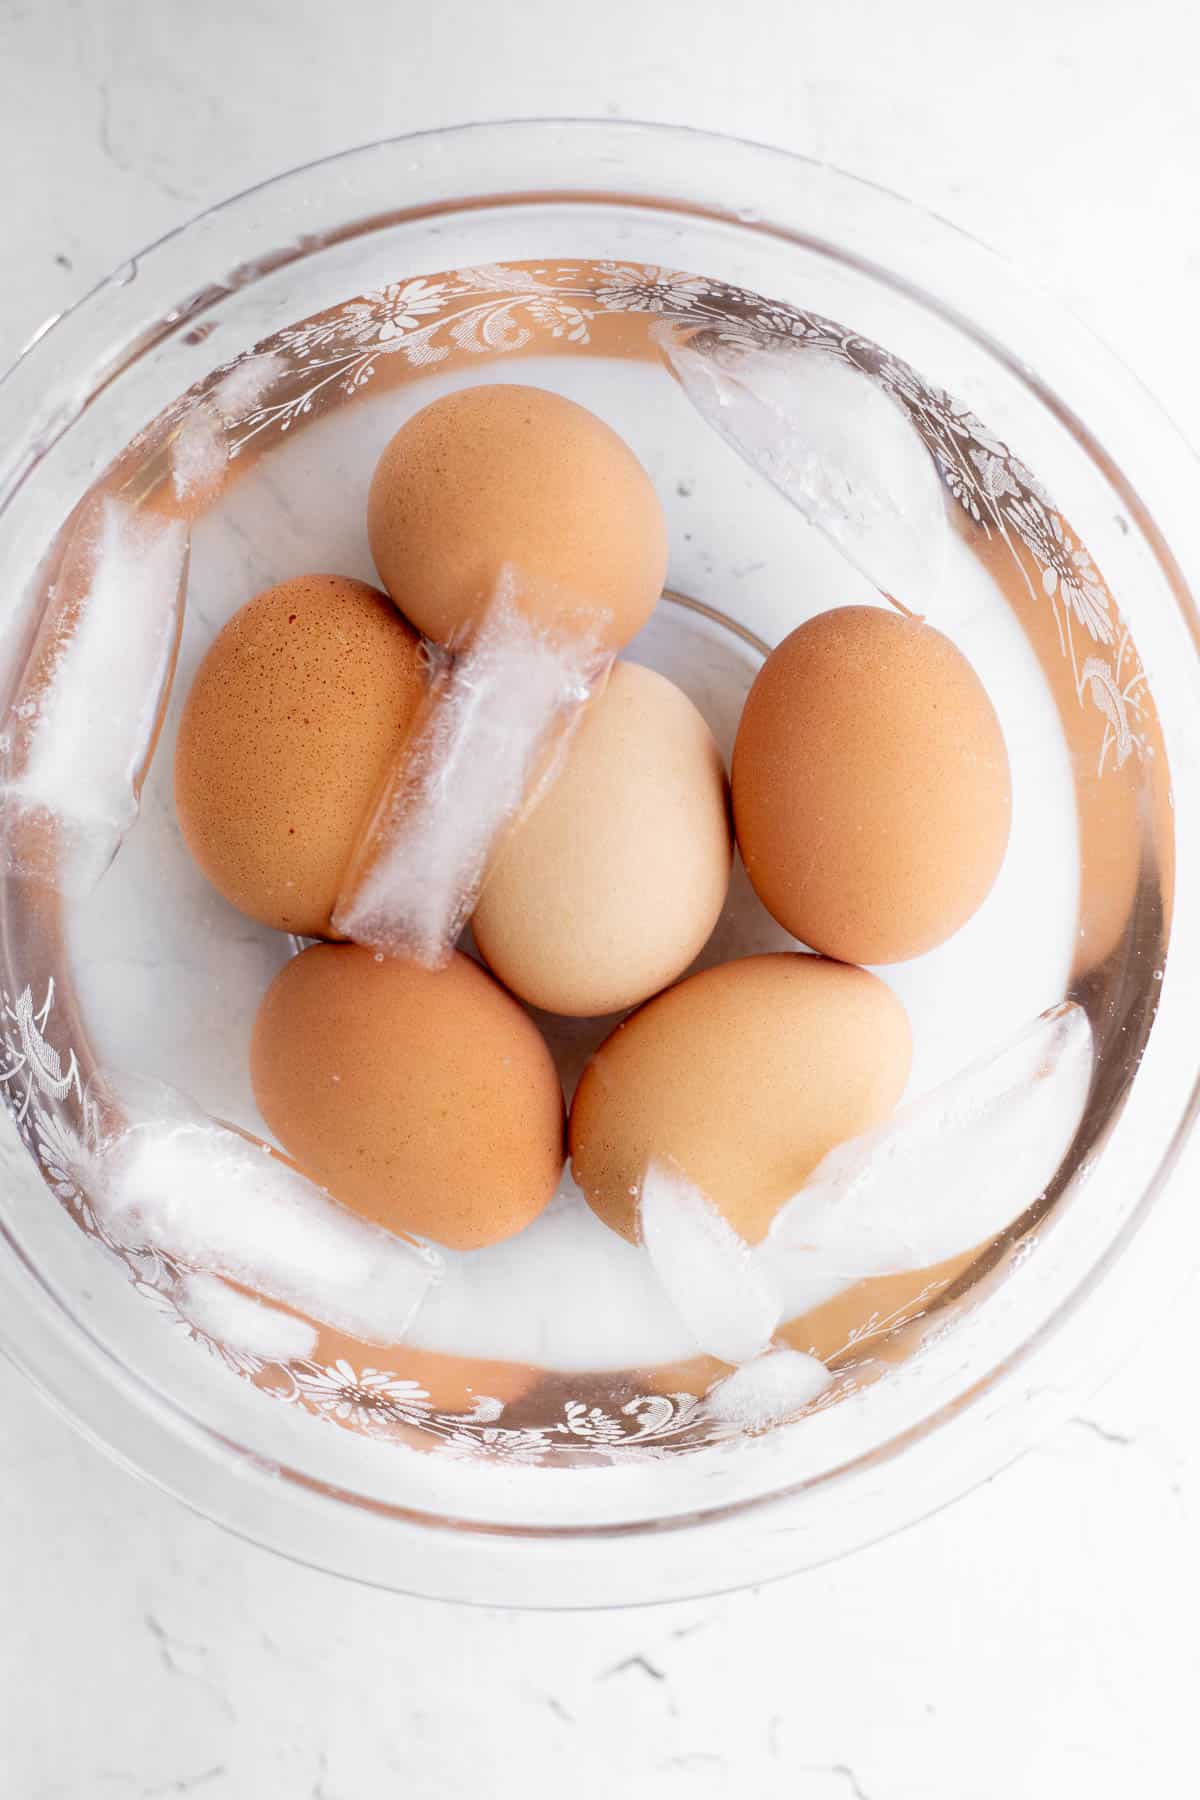 6 brown eggs in an ice bath.